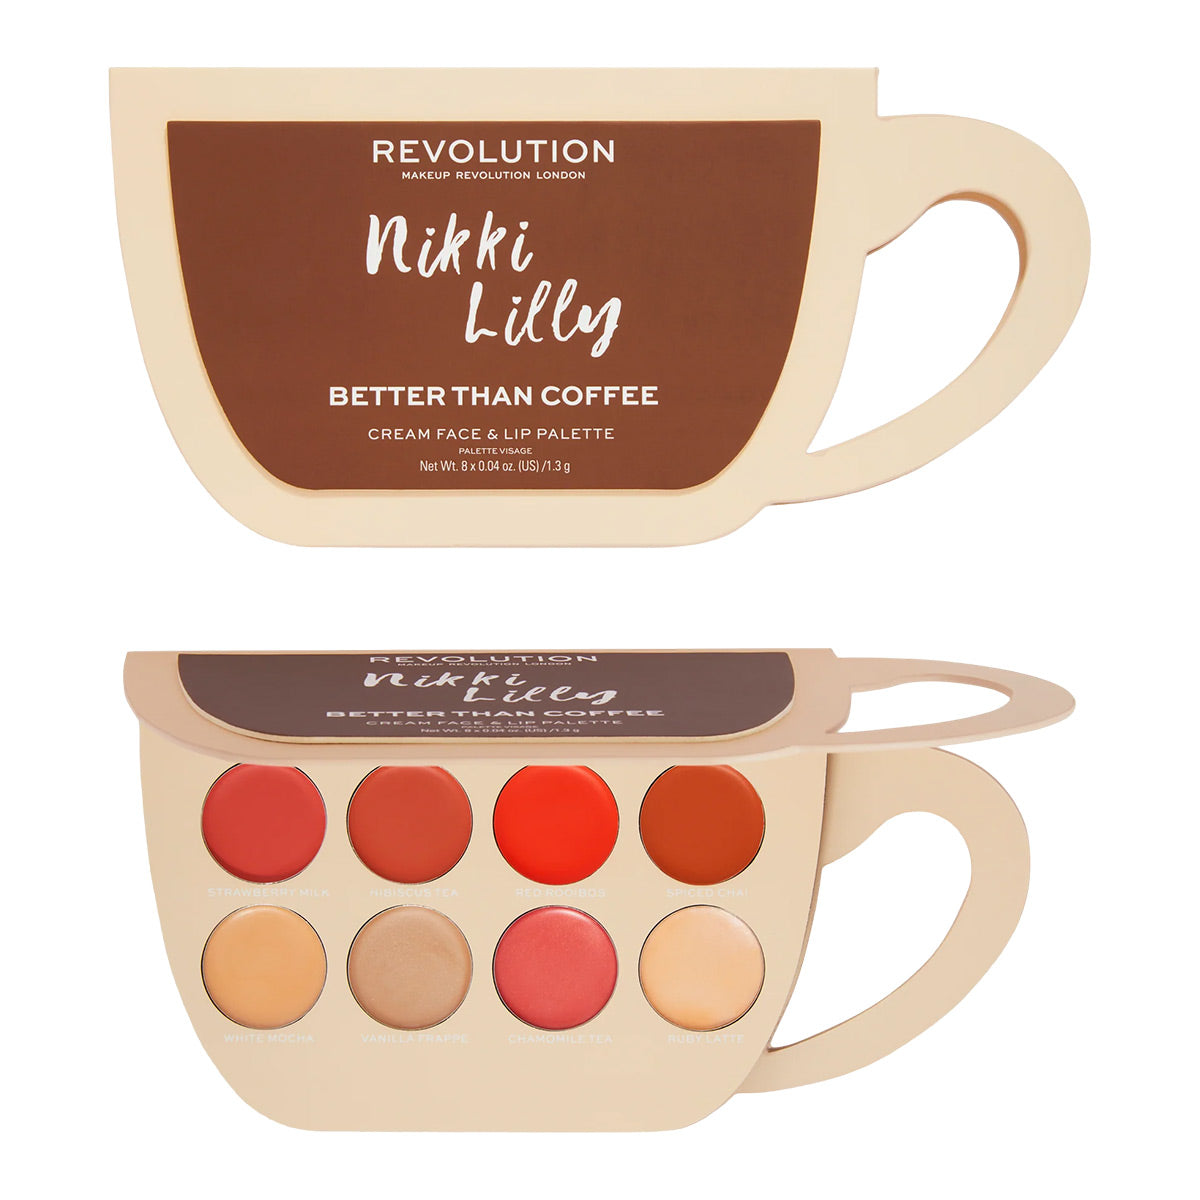 Revolution Nikki Lilly Better Than Coffee Cream Face & Lip Palette